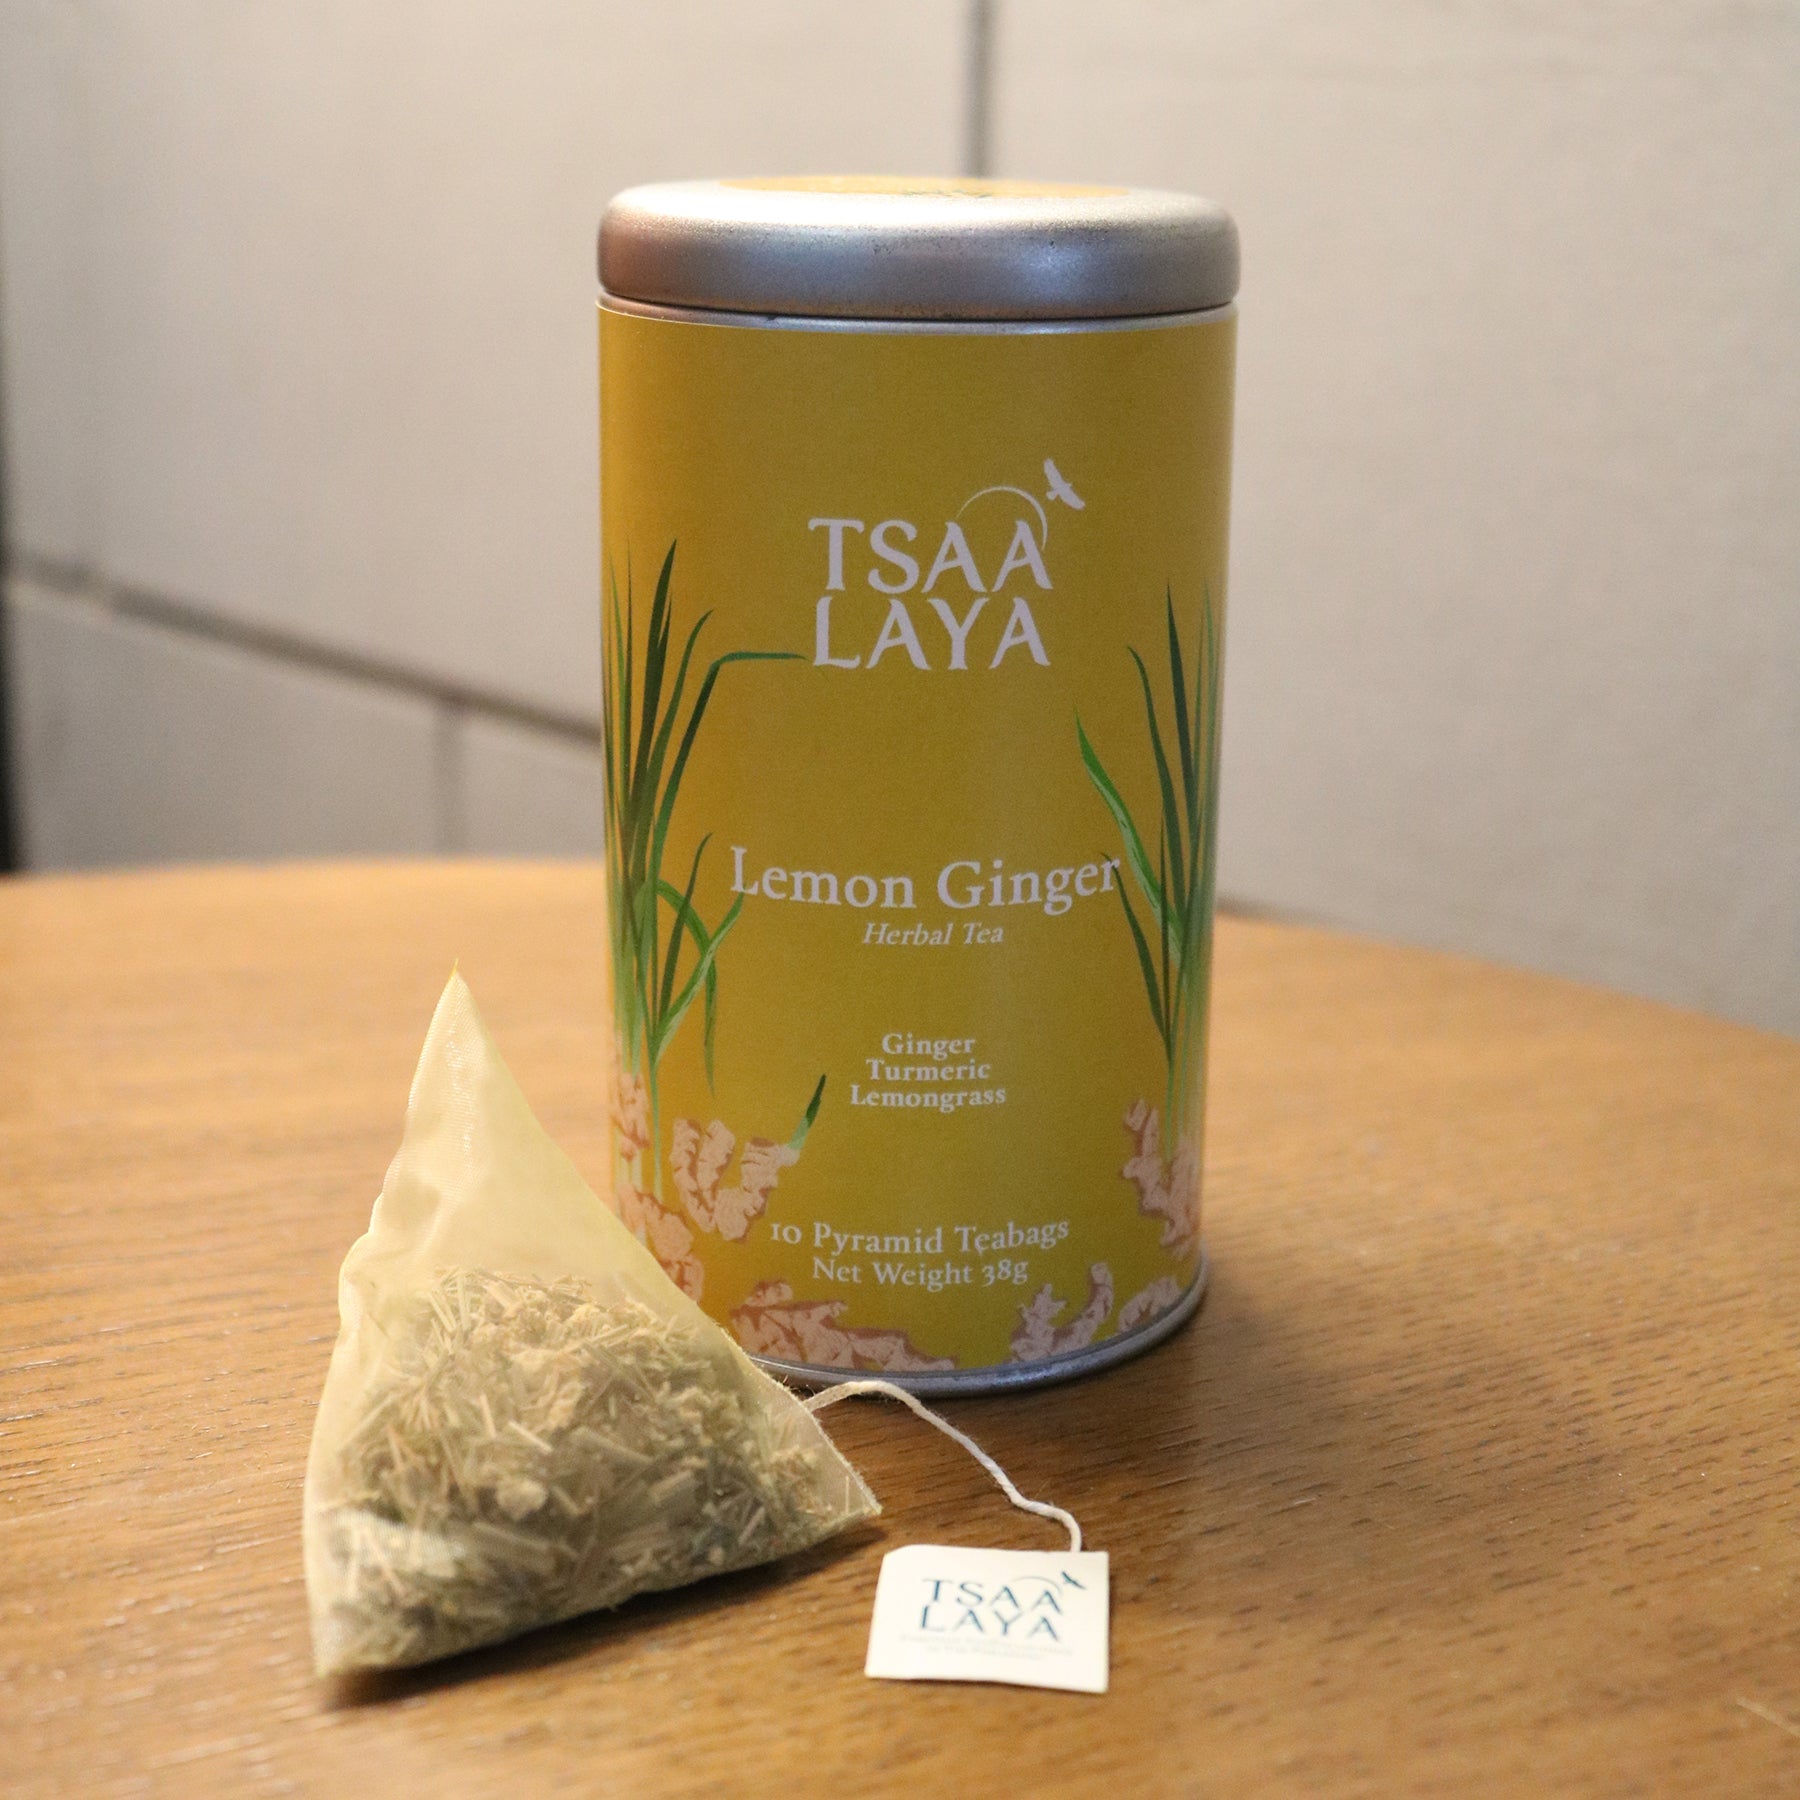 Philippine Coffee Store with Tsaa Laya Lemon Ginger Herbal Tea - Bo's Coffee